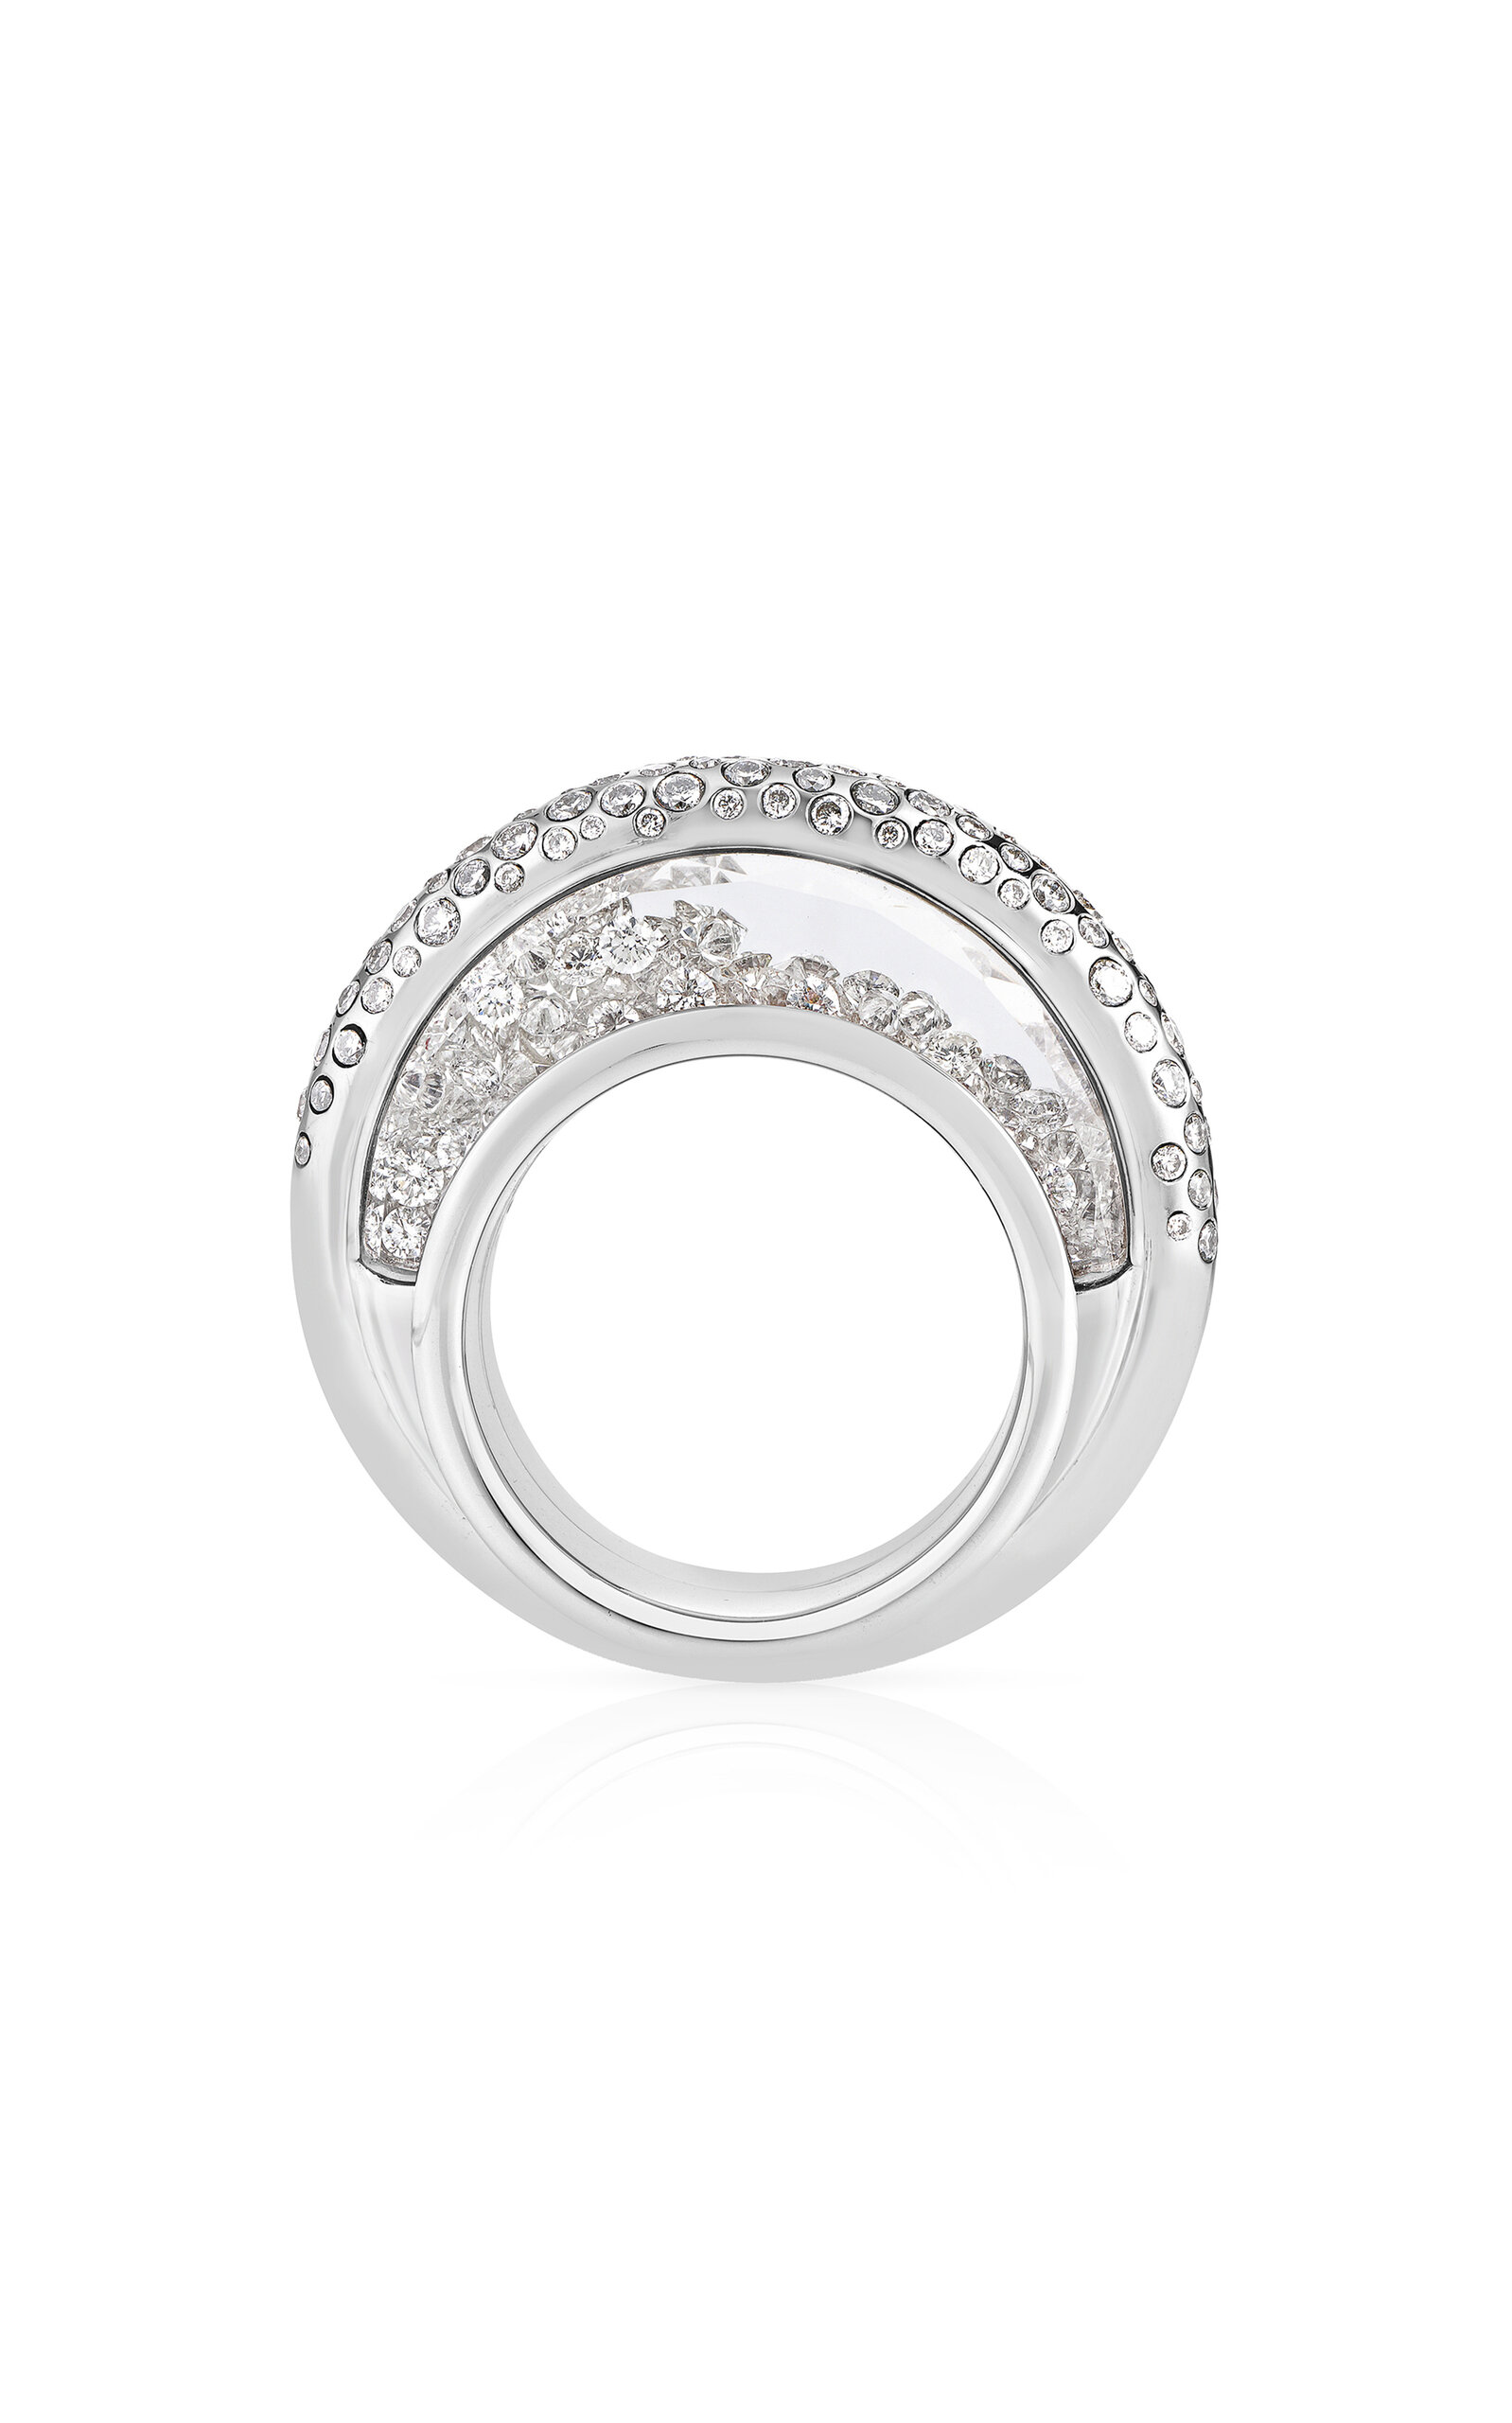 Moritz Glik 18k White Gold Artemis Pave Ring